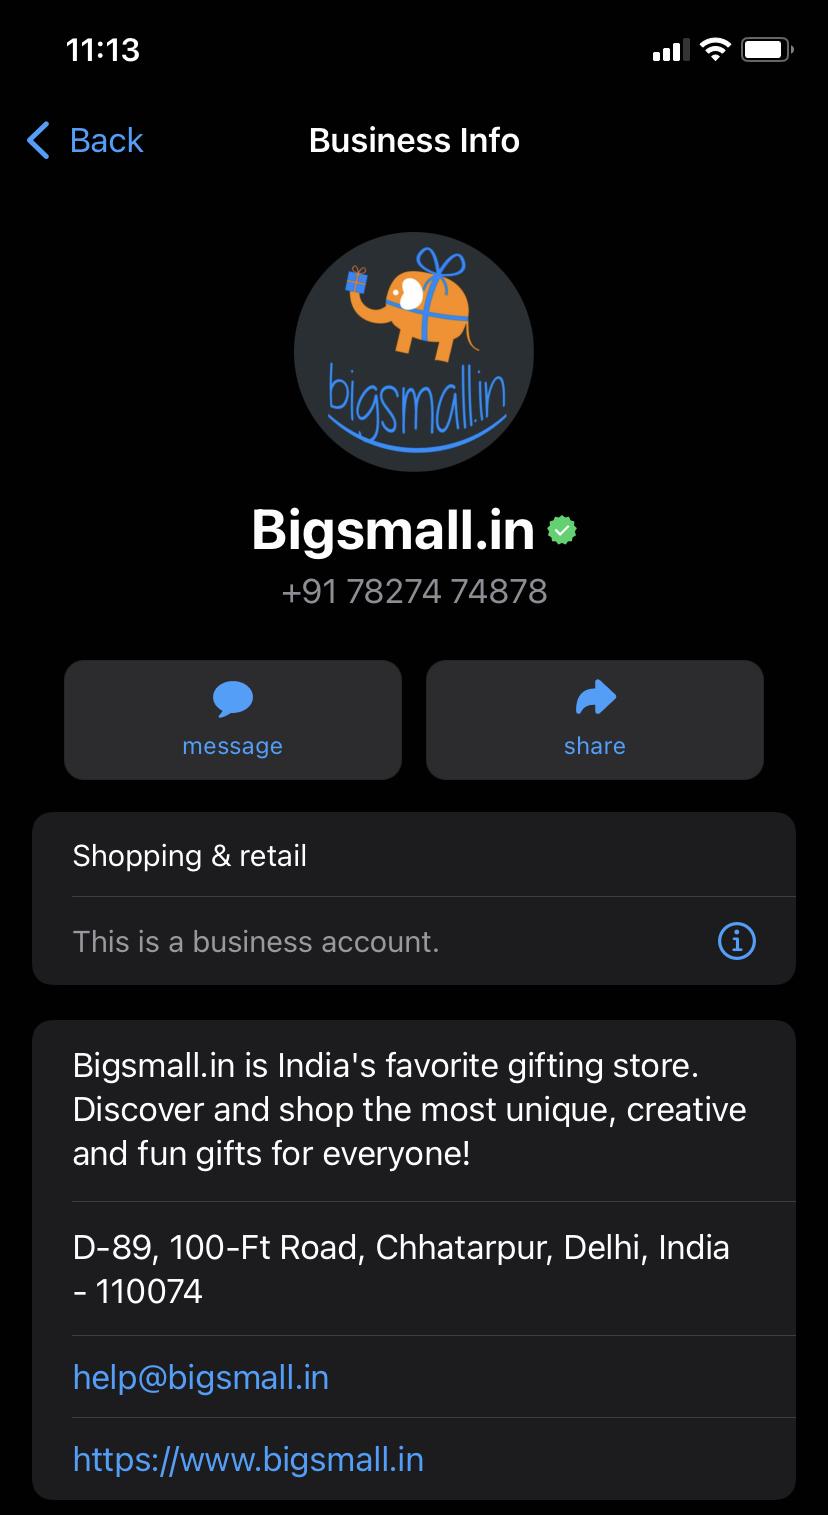 Bigsmall.in WhatsApp Business profile